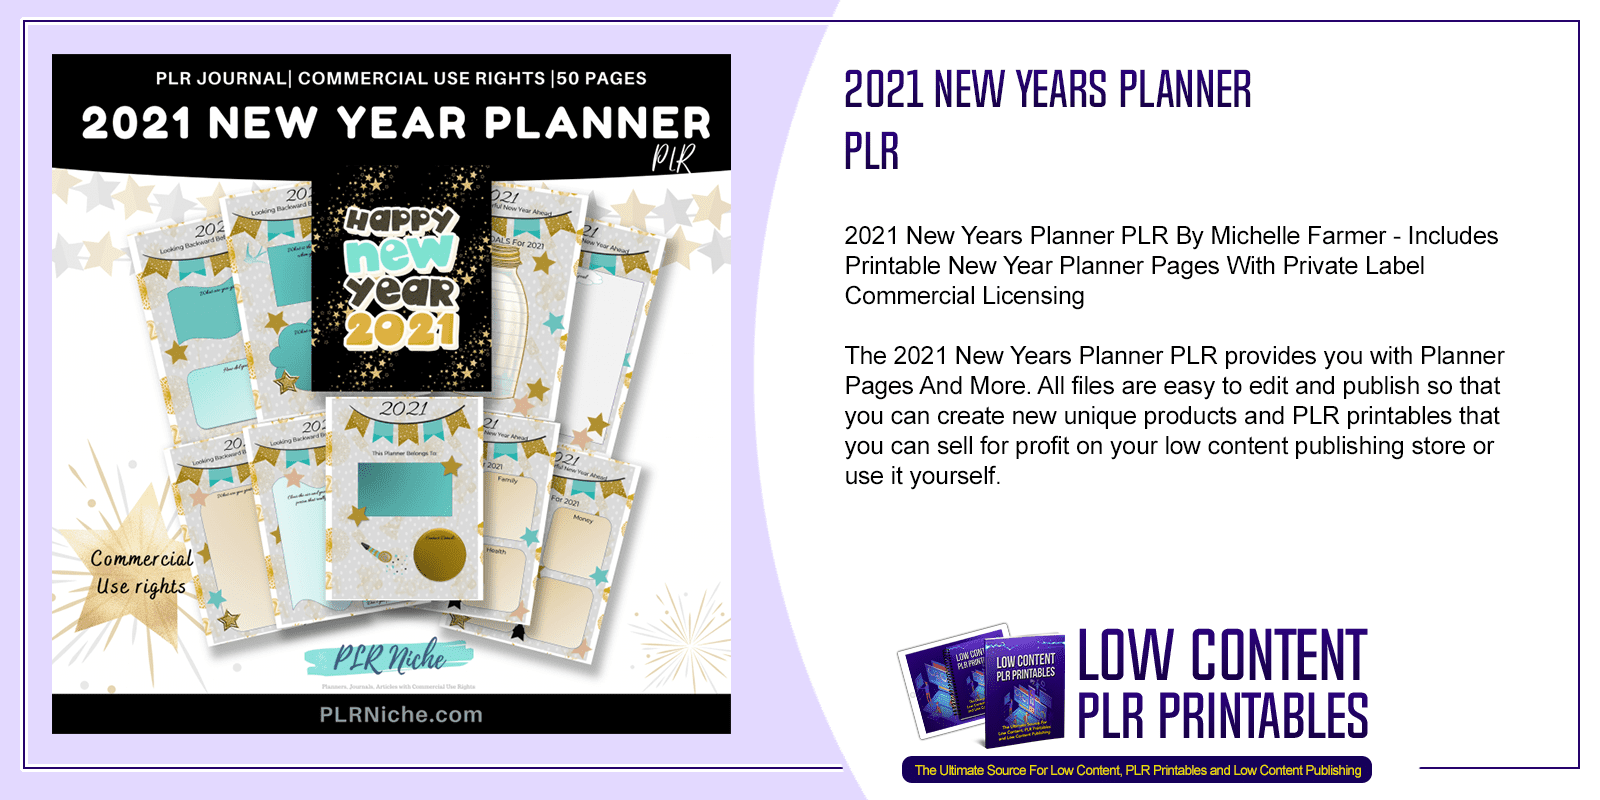 2021 New Years Planner PLR